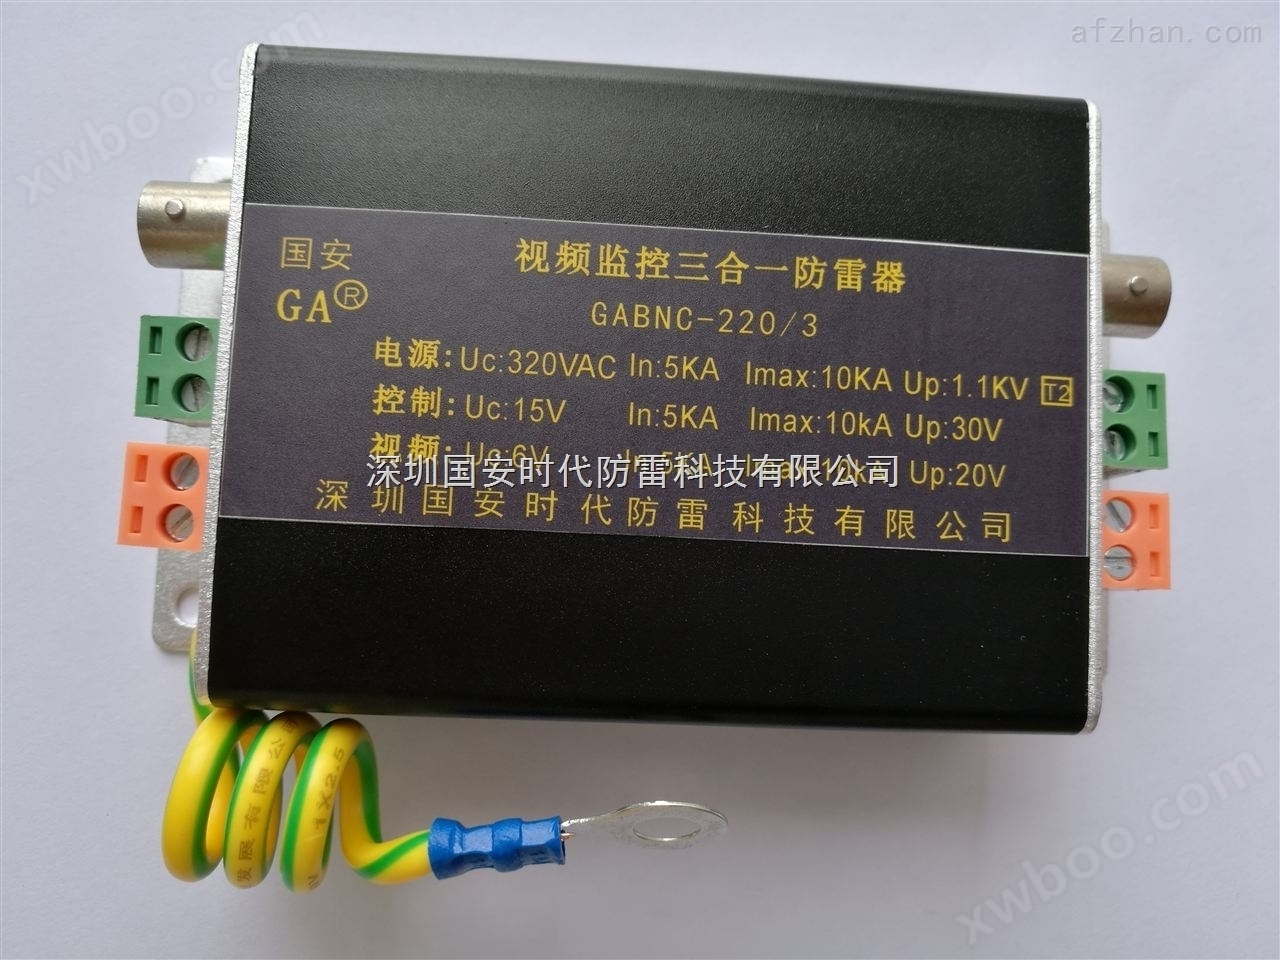 GABNC-220/3国安三合一视频监控防雷器